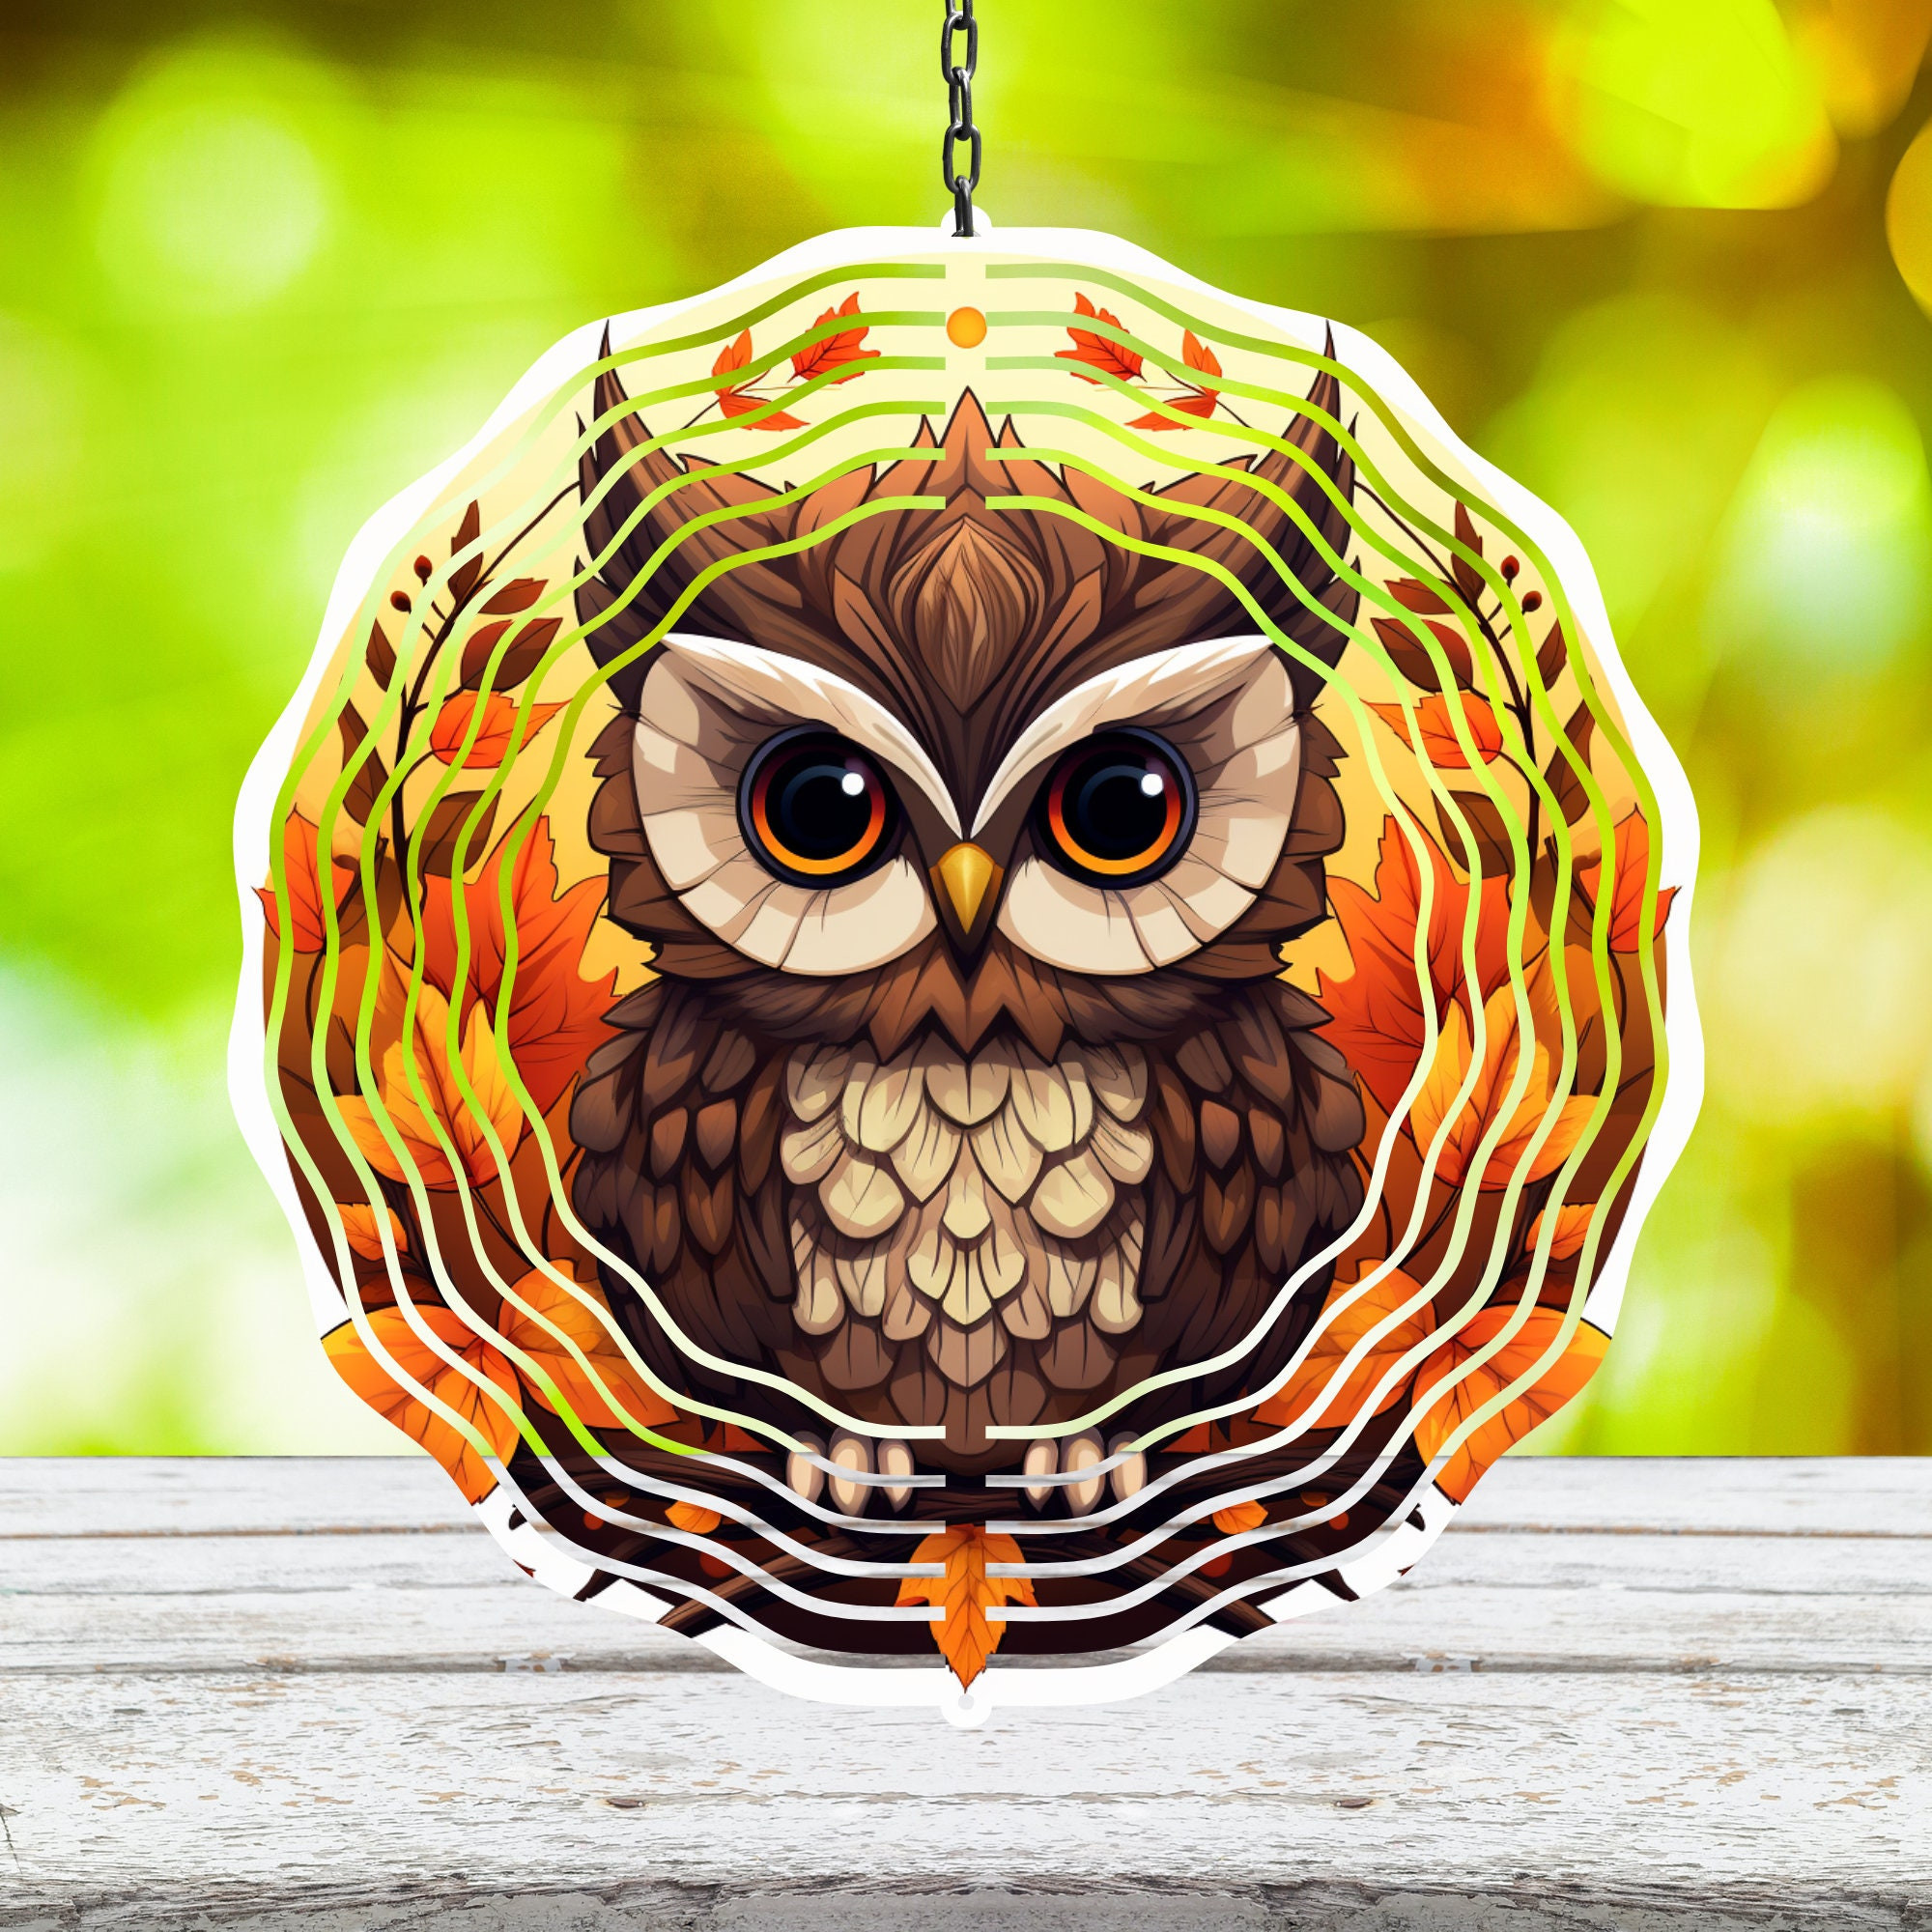 Fall Owl Wind Spinner For Yard And Garden, Outdoor Garden Yard Decoration, Garden Decor, Chime Art Gift